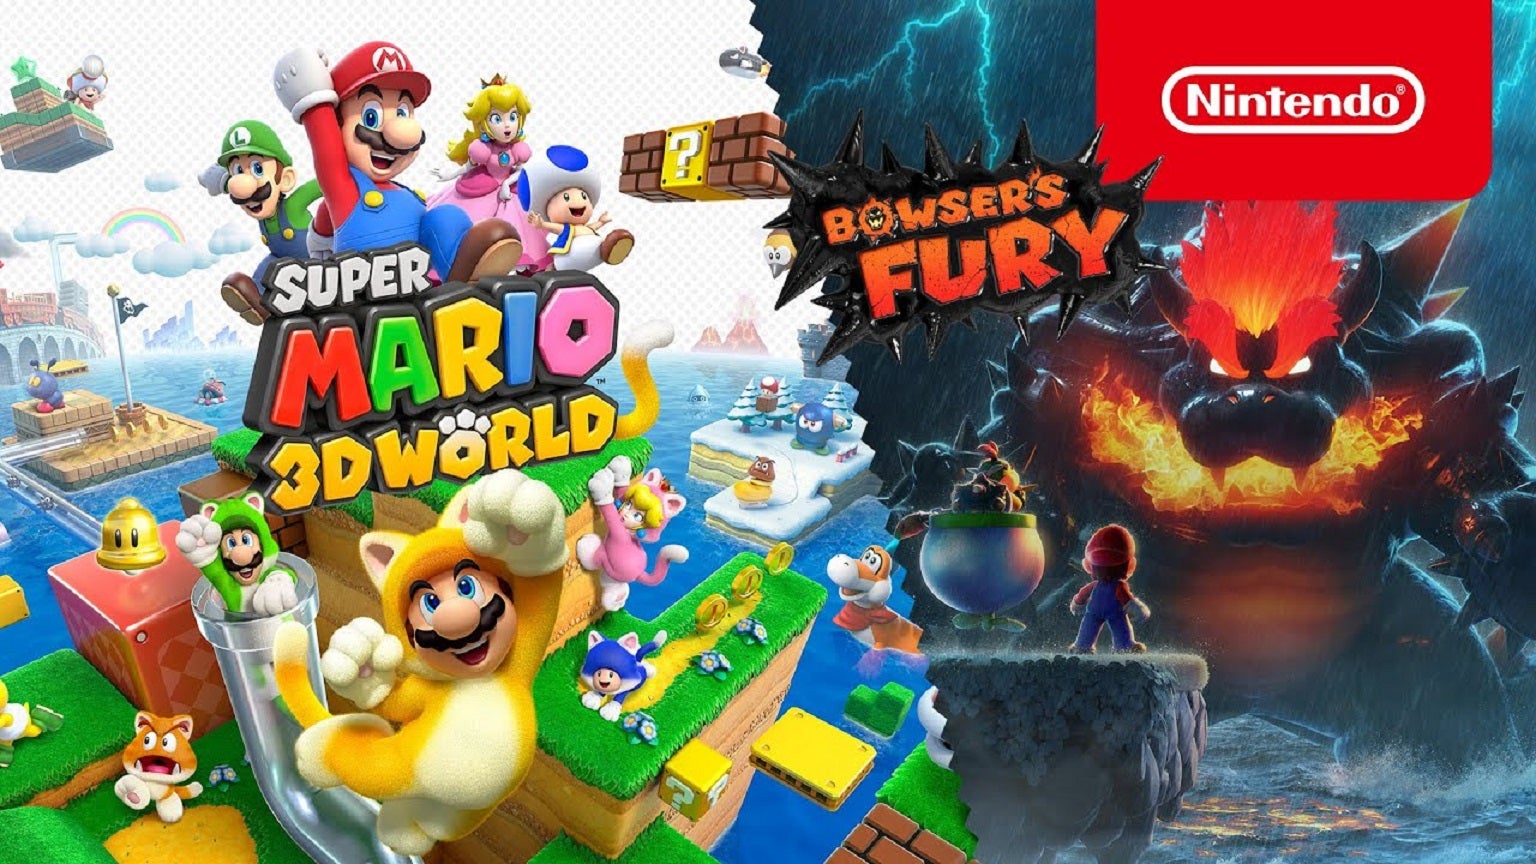 Super mario 3d world bowsers. Марио 3д ворлд на Нинтендо свитч. Super Mario 3d Nintendo Switch. Super Mario 3d World Bowser's Fury Nintendo Switch. Super Mario 3 d World Bowser s Fury.